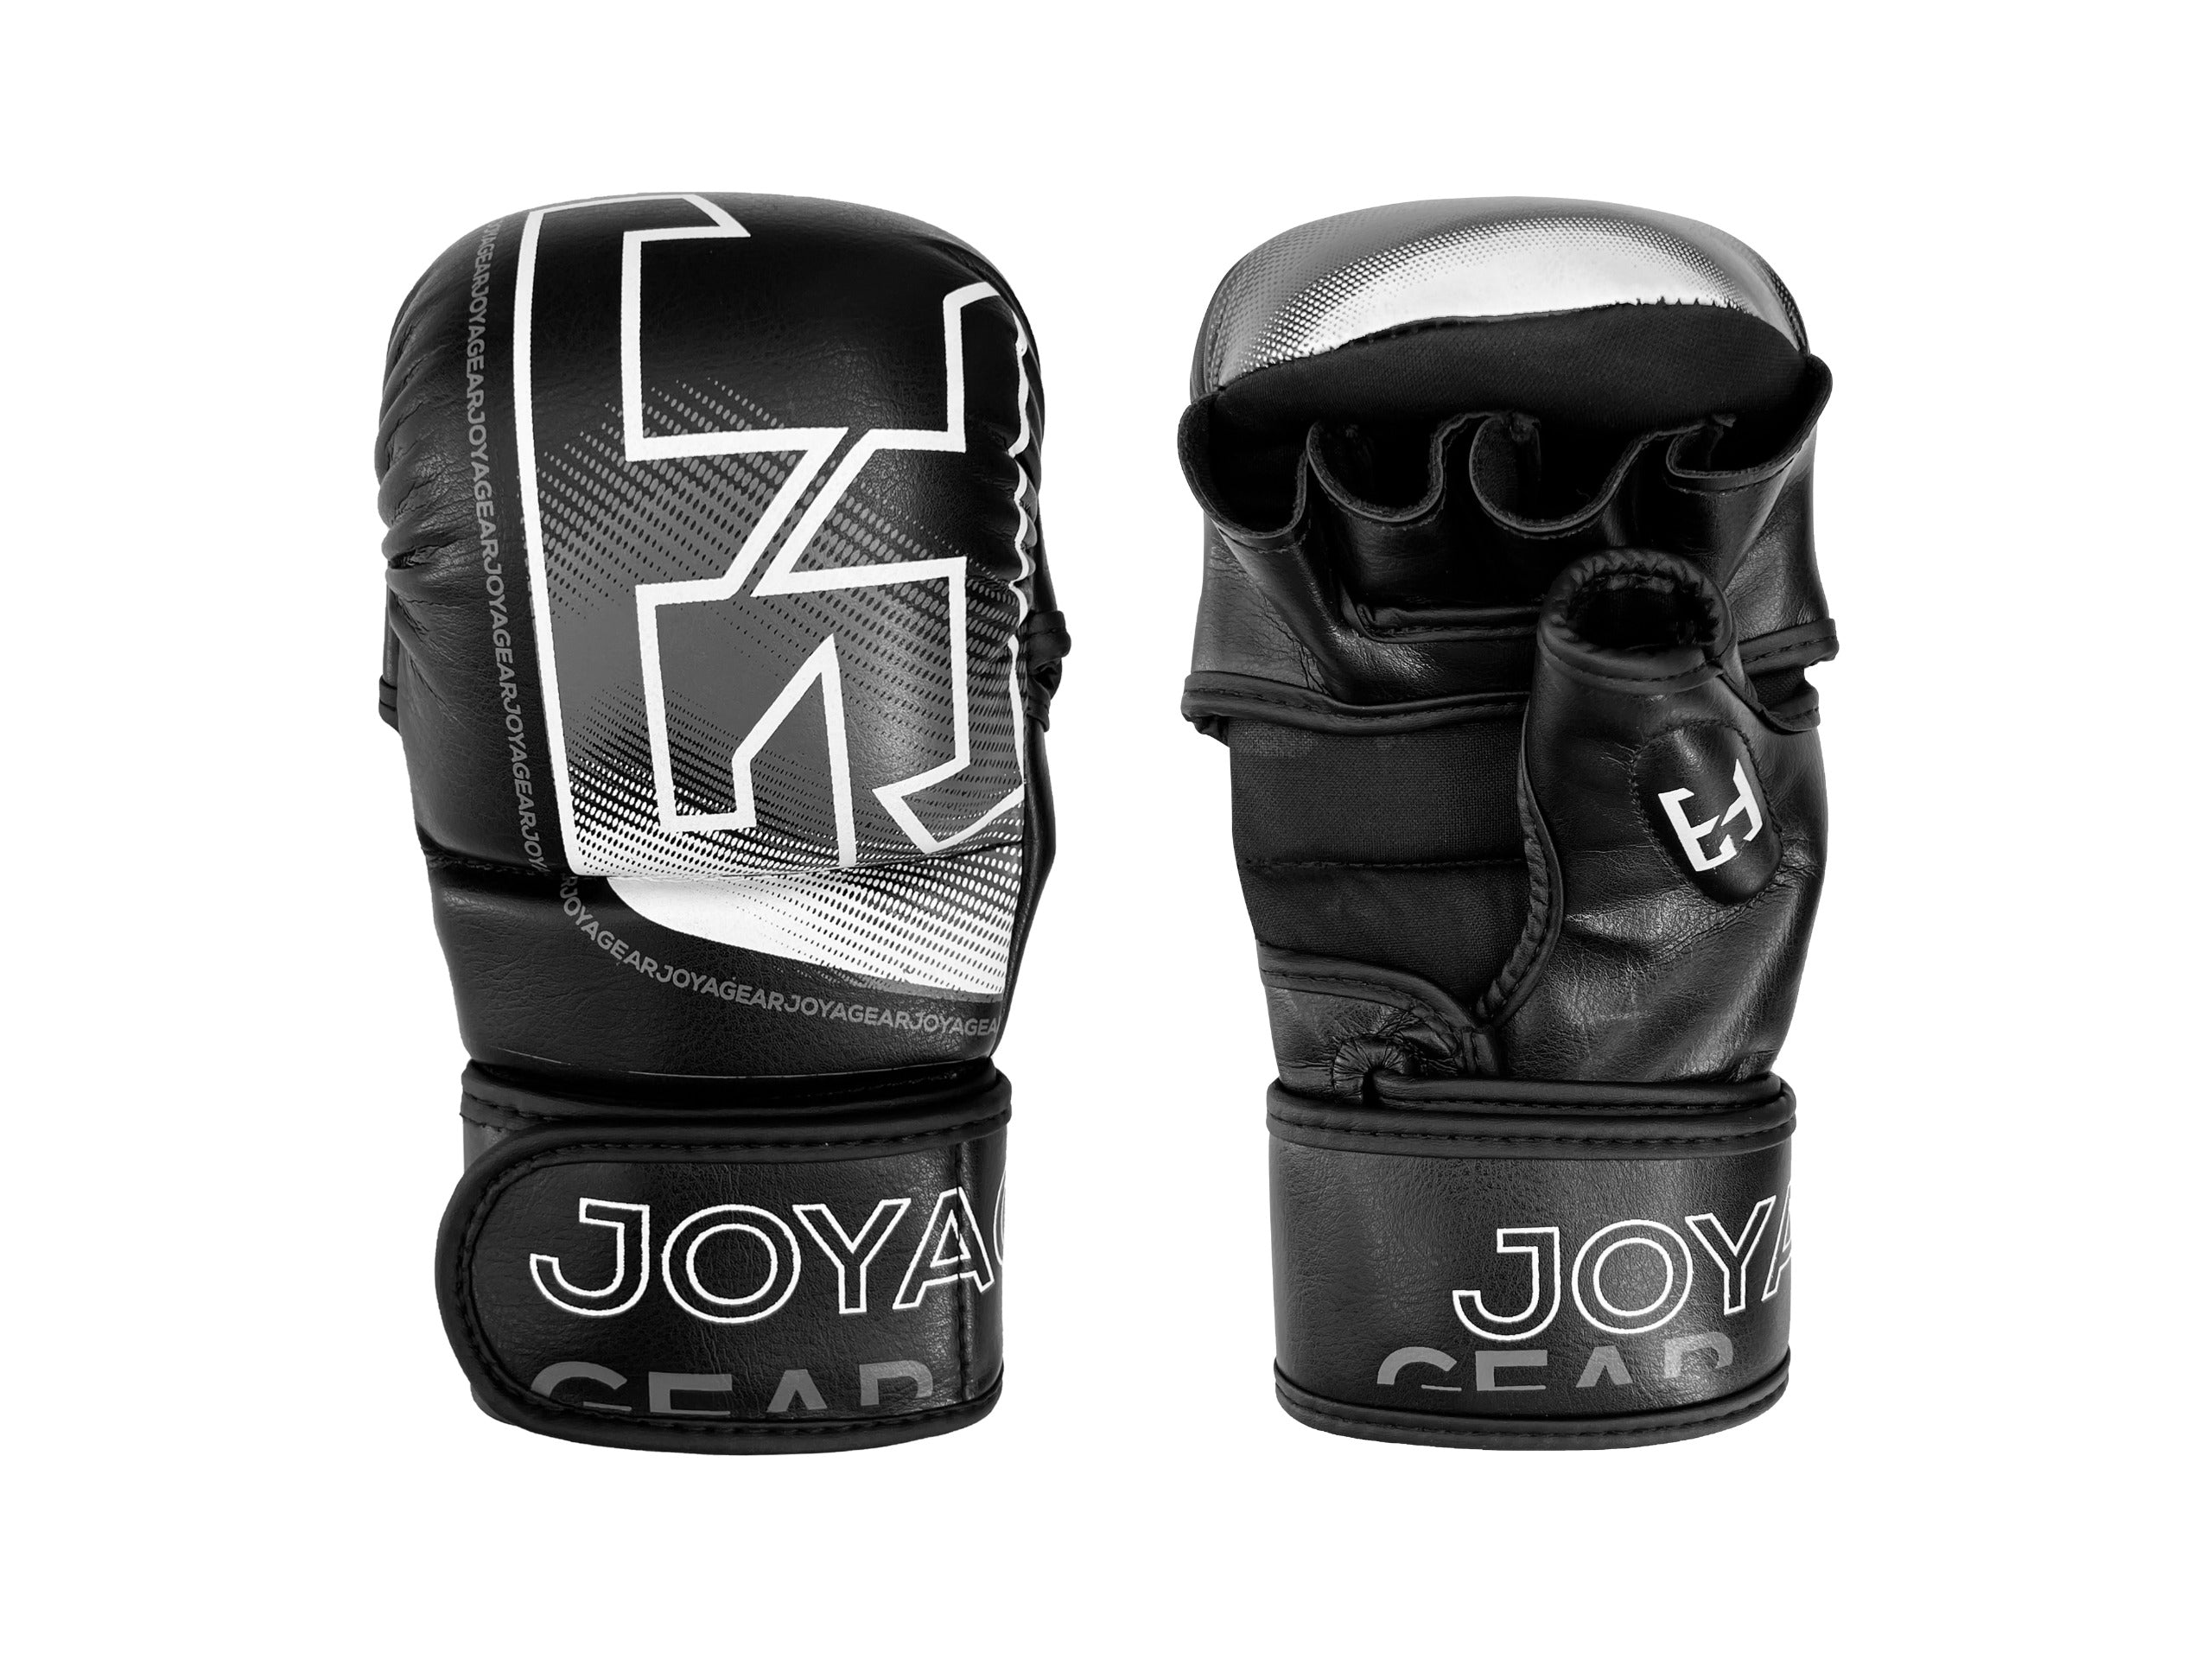 The JoyaGear "EVOLUTION" MMA Sparring Glove